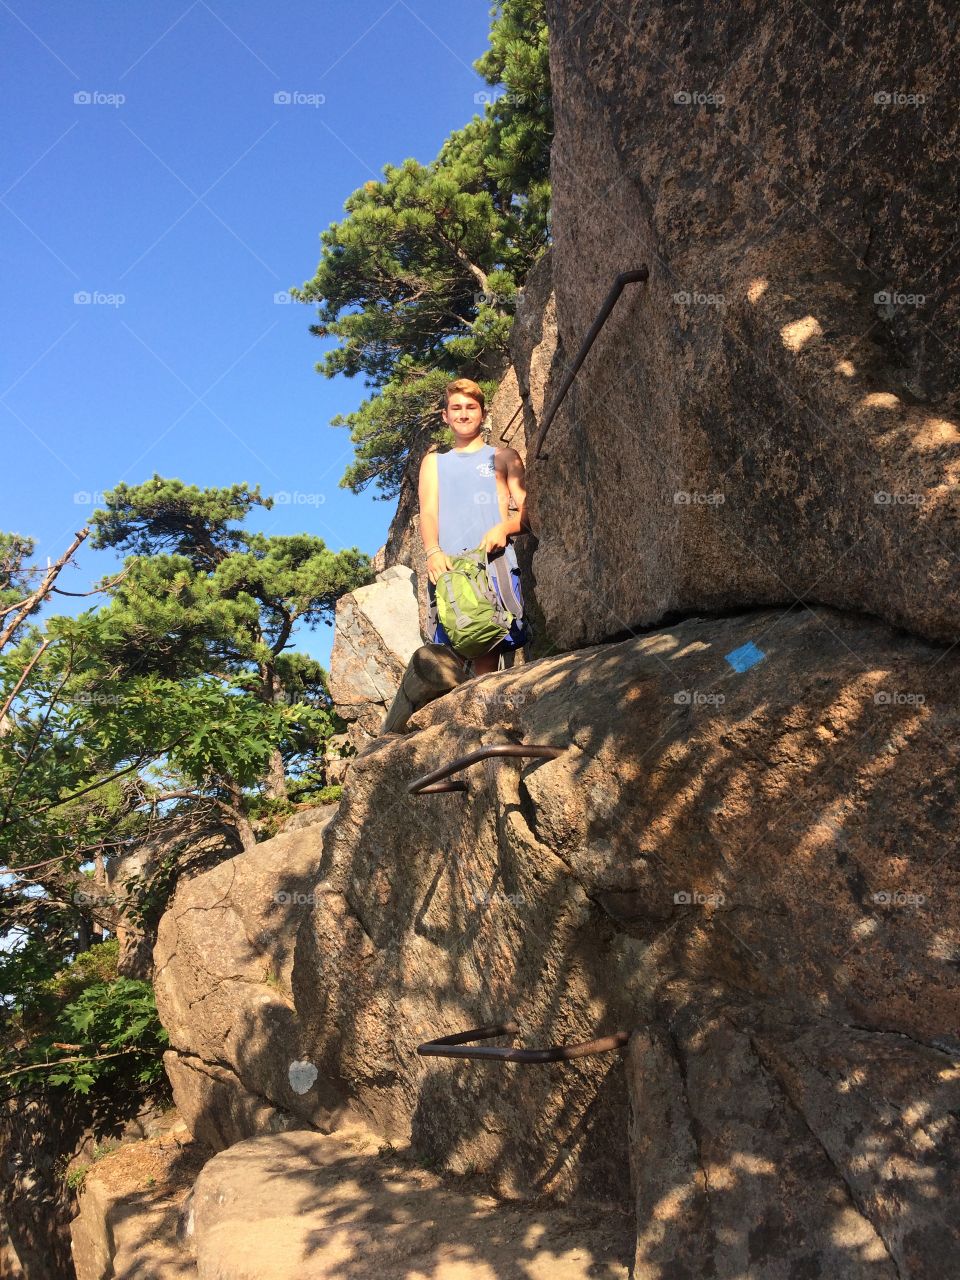 Cliff side climbing